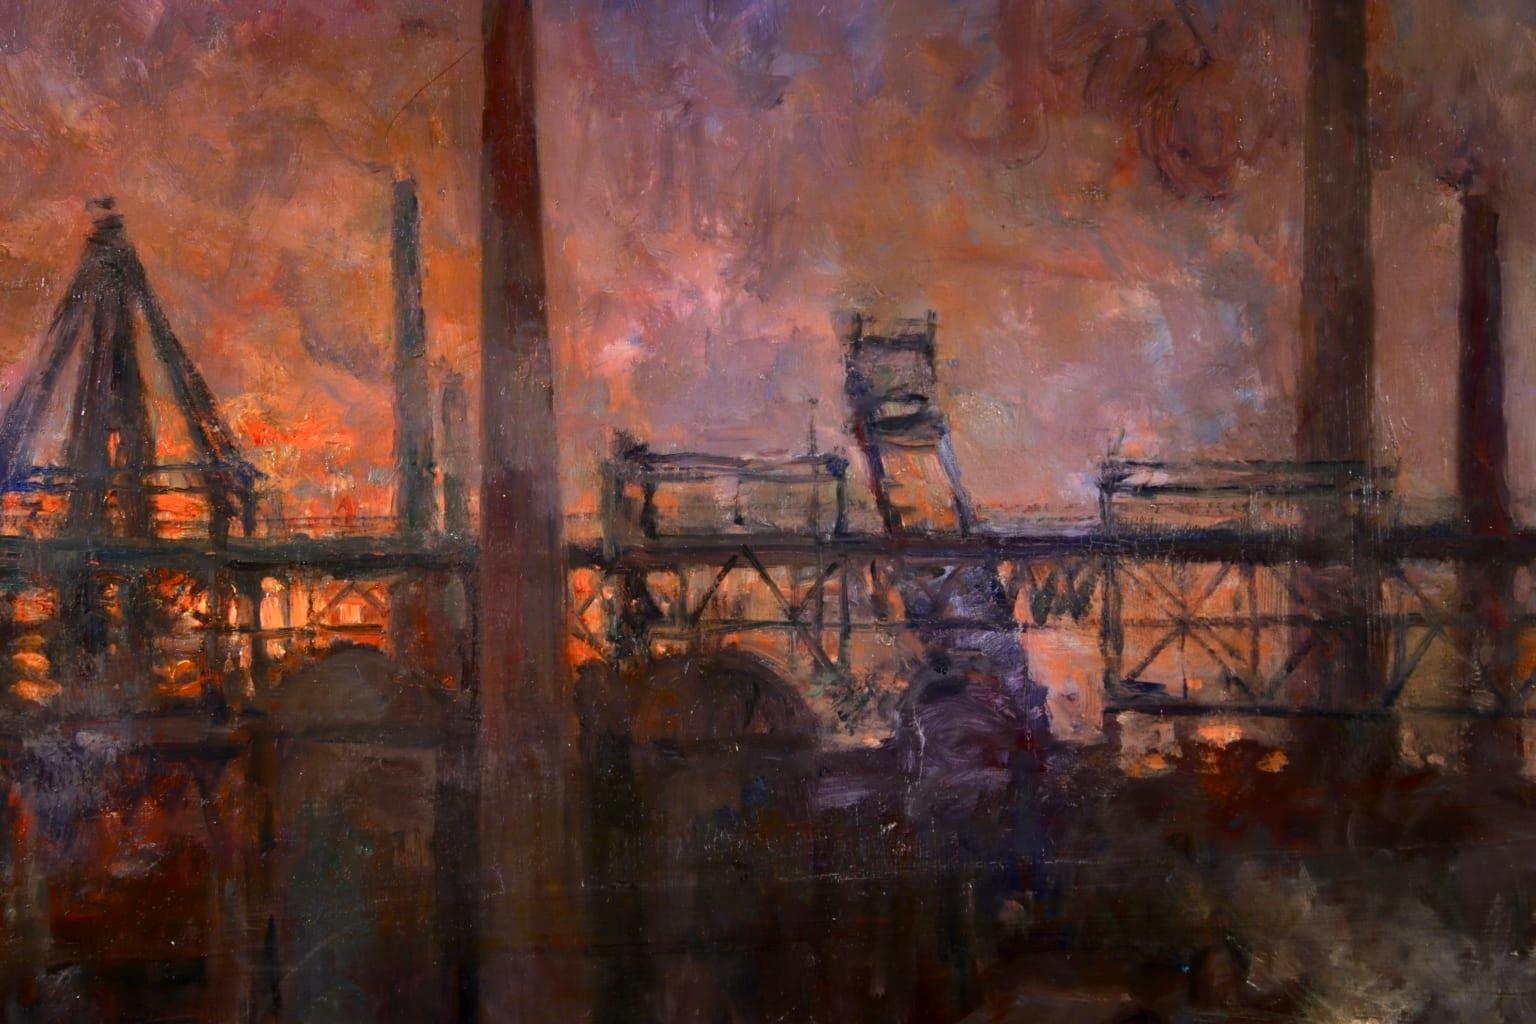 Blast Furnaces - Night - Realist Oil, Industrial Cityscape by Oswald Poreau 3